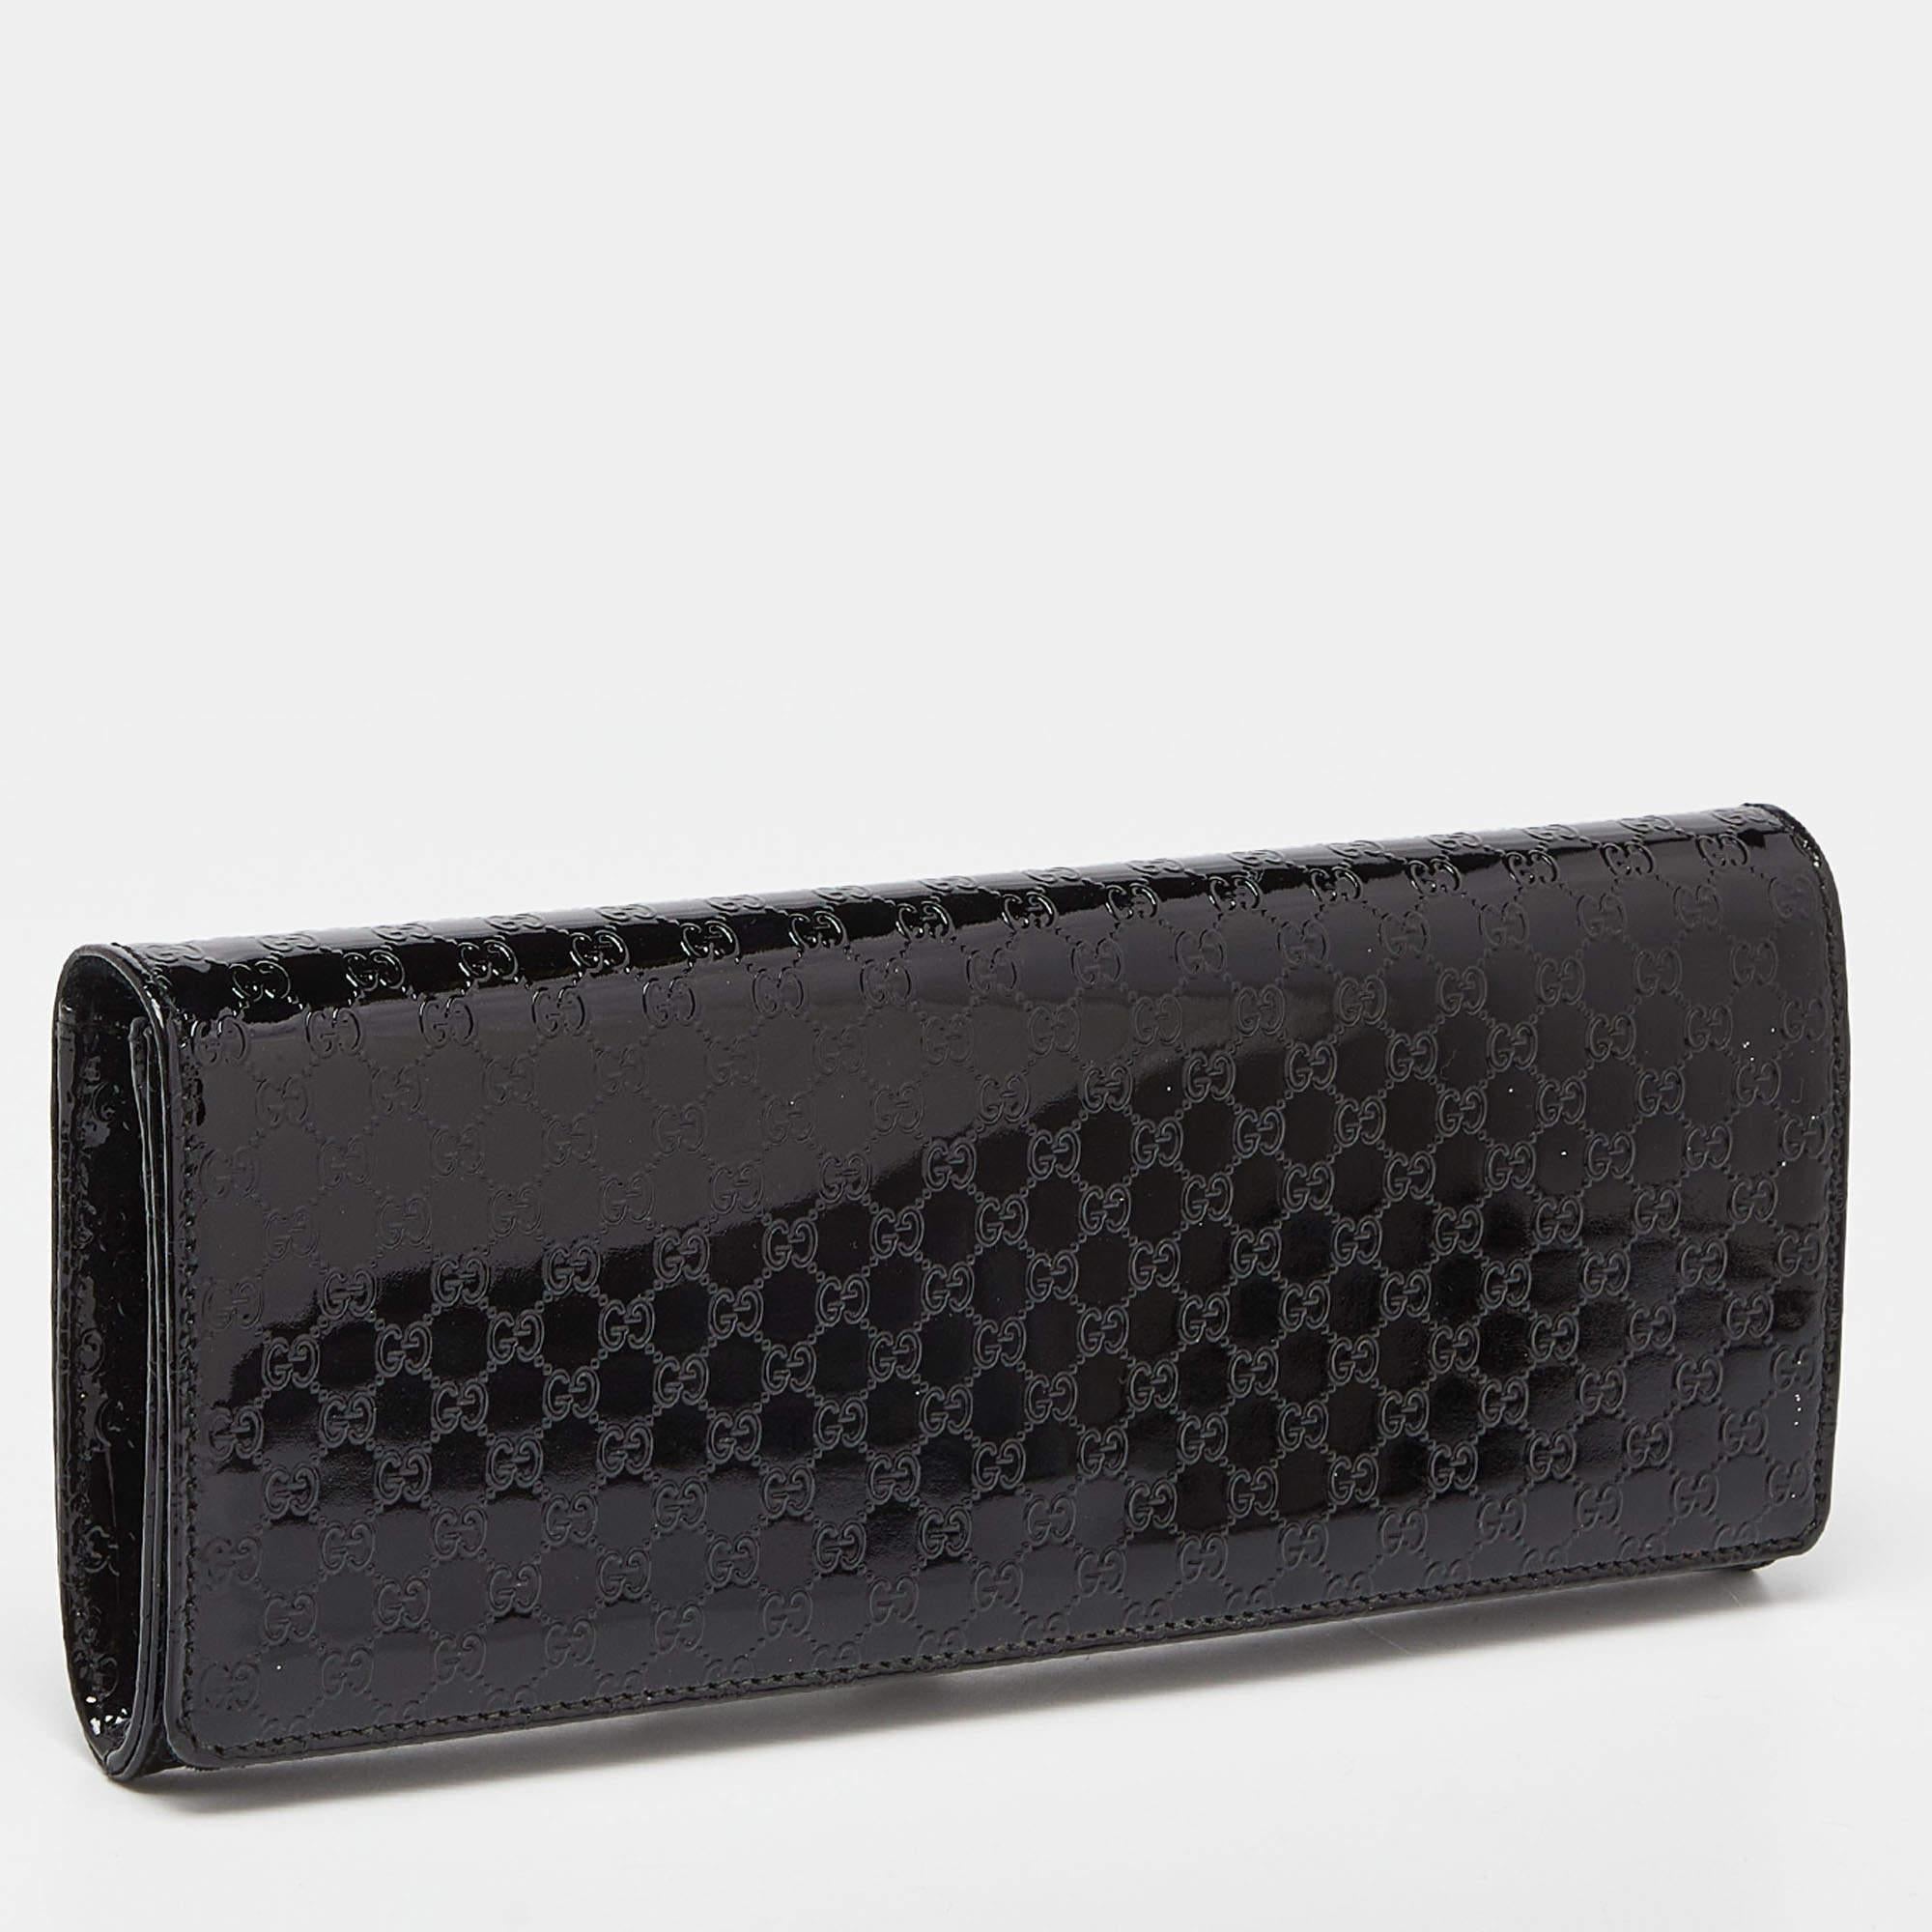 Gucci Black Microguccissima Patent Leather Small Broadway Clutch For Sale 8